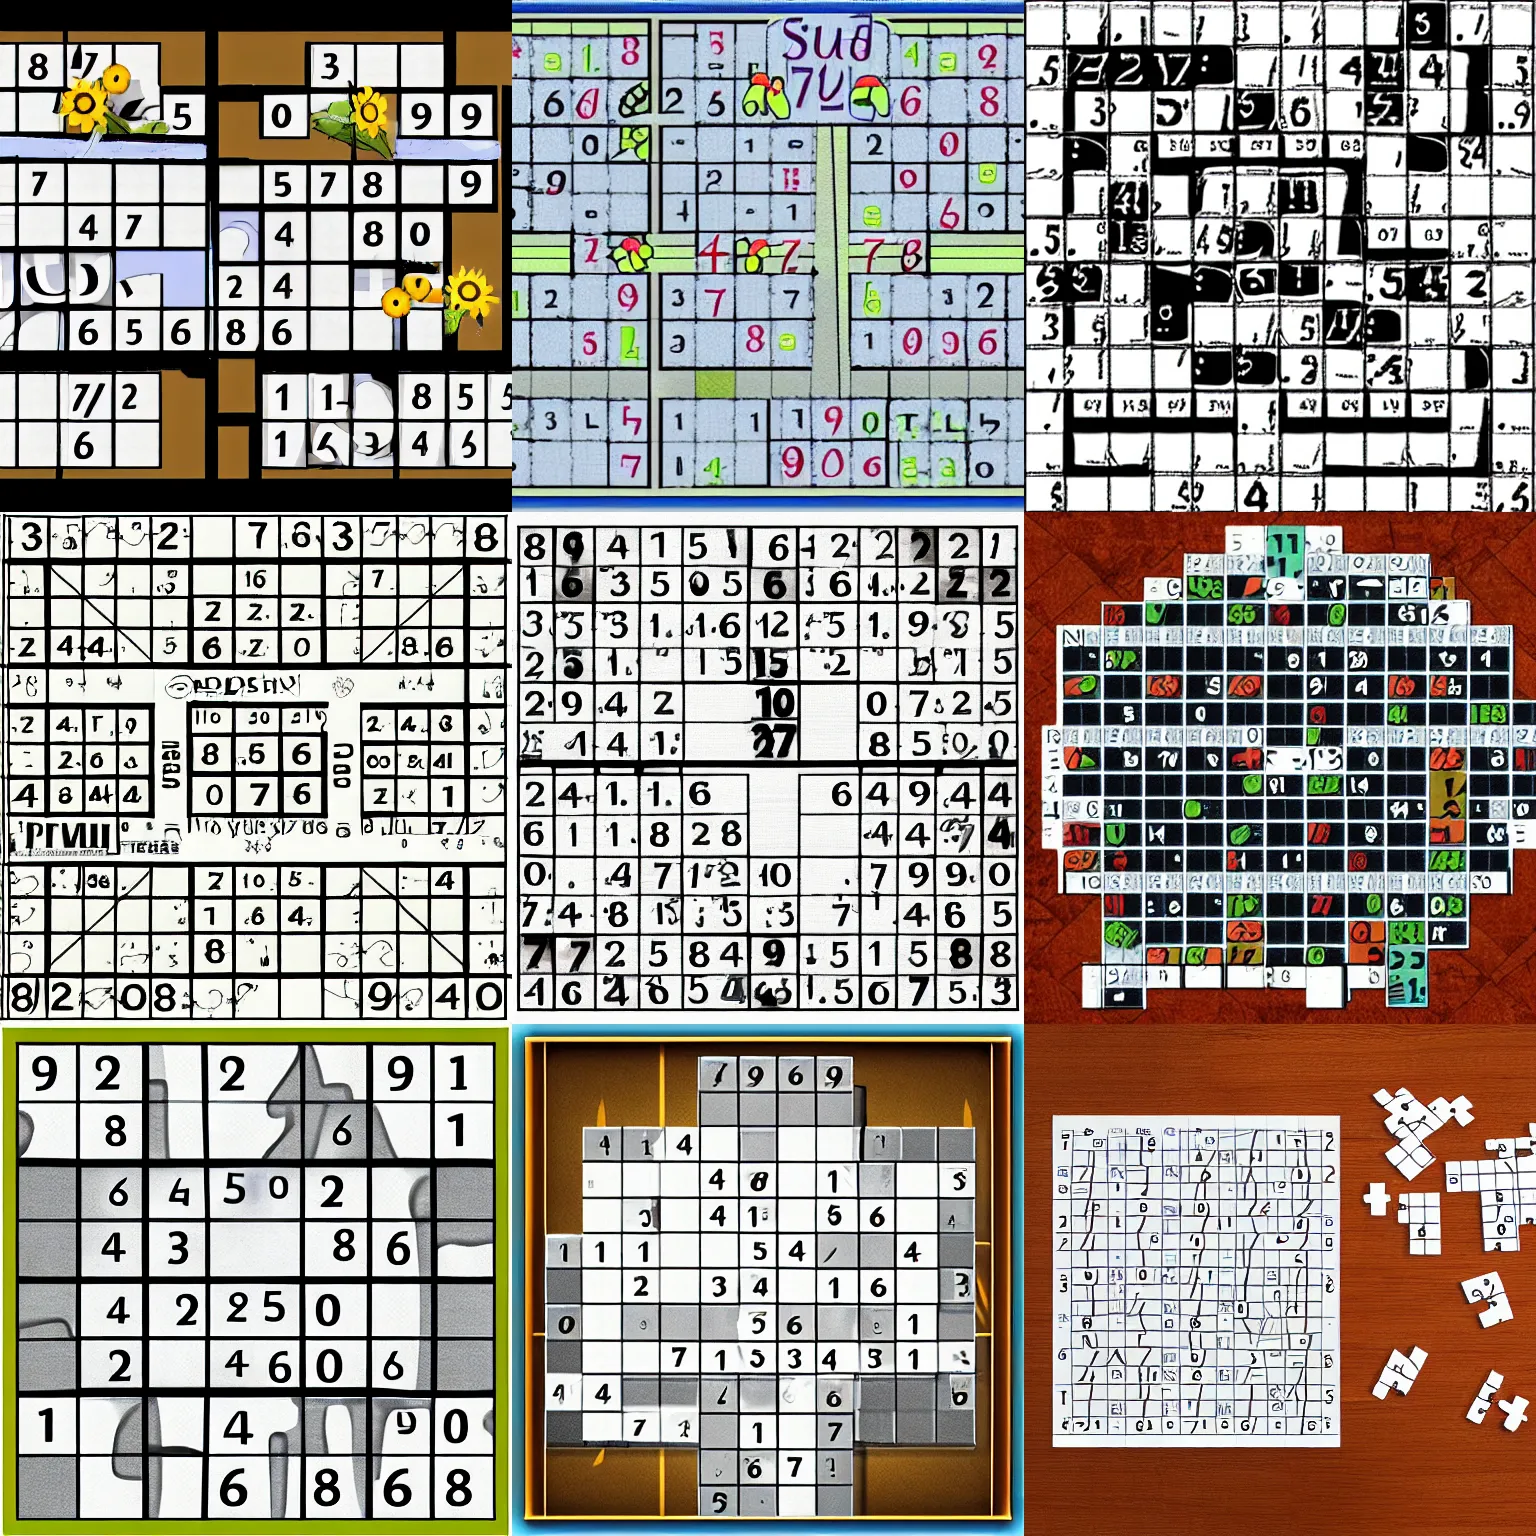 Prompt: sudoku puzzle